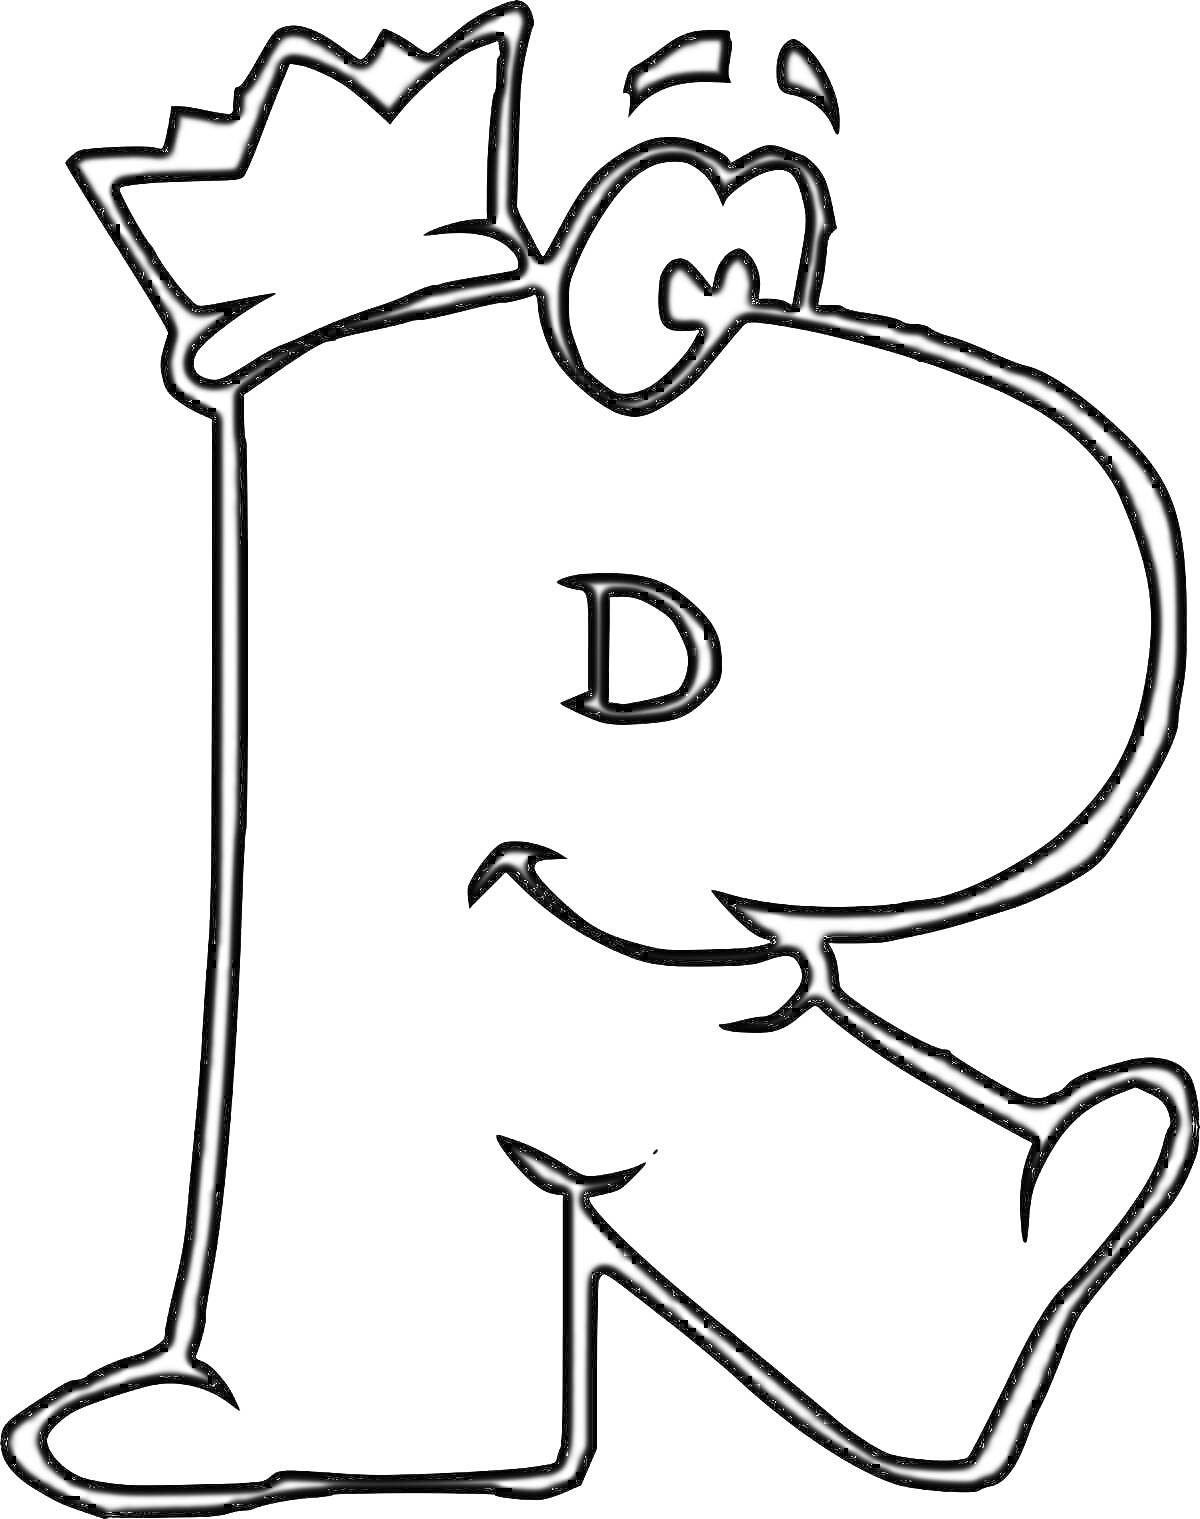 На раскраске изображено: Буква R, Алфавит, Шапка, Глаза, Брови, Улыбка, Ноги